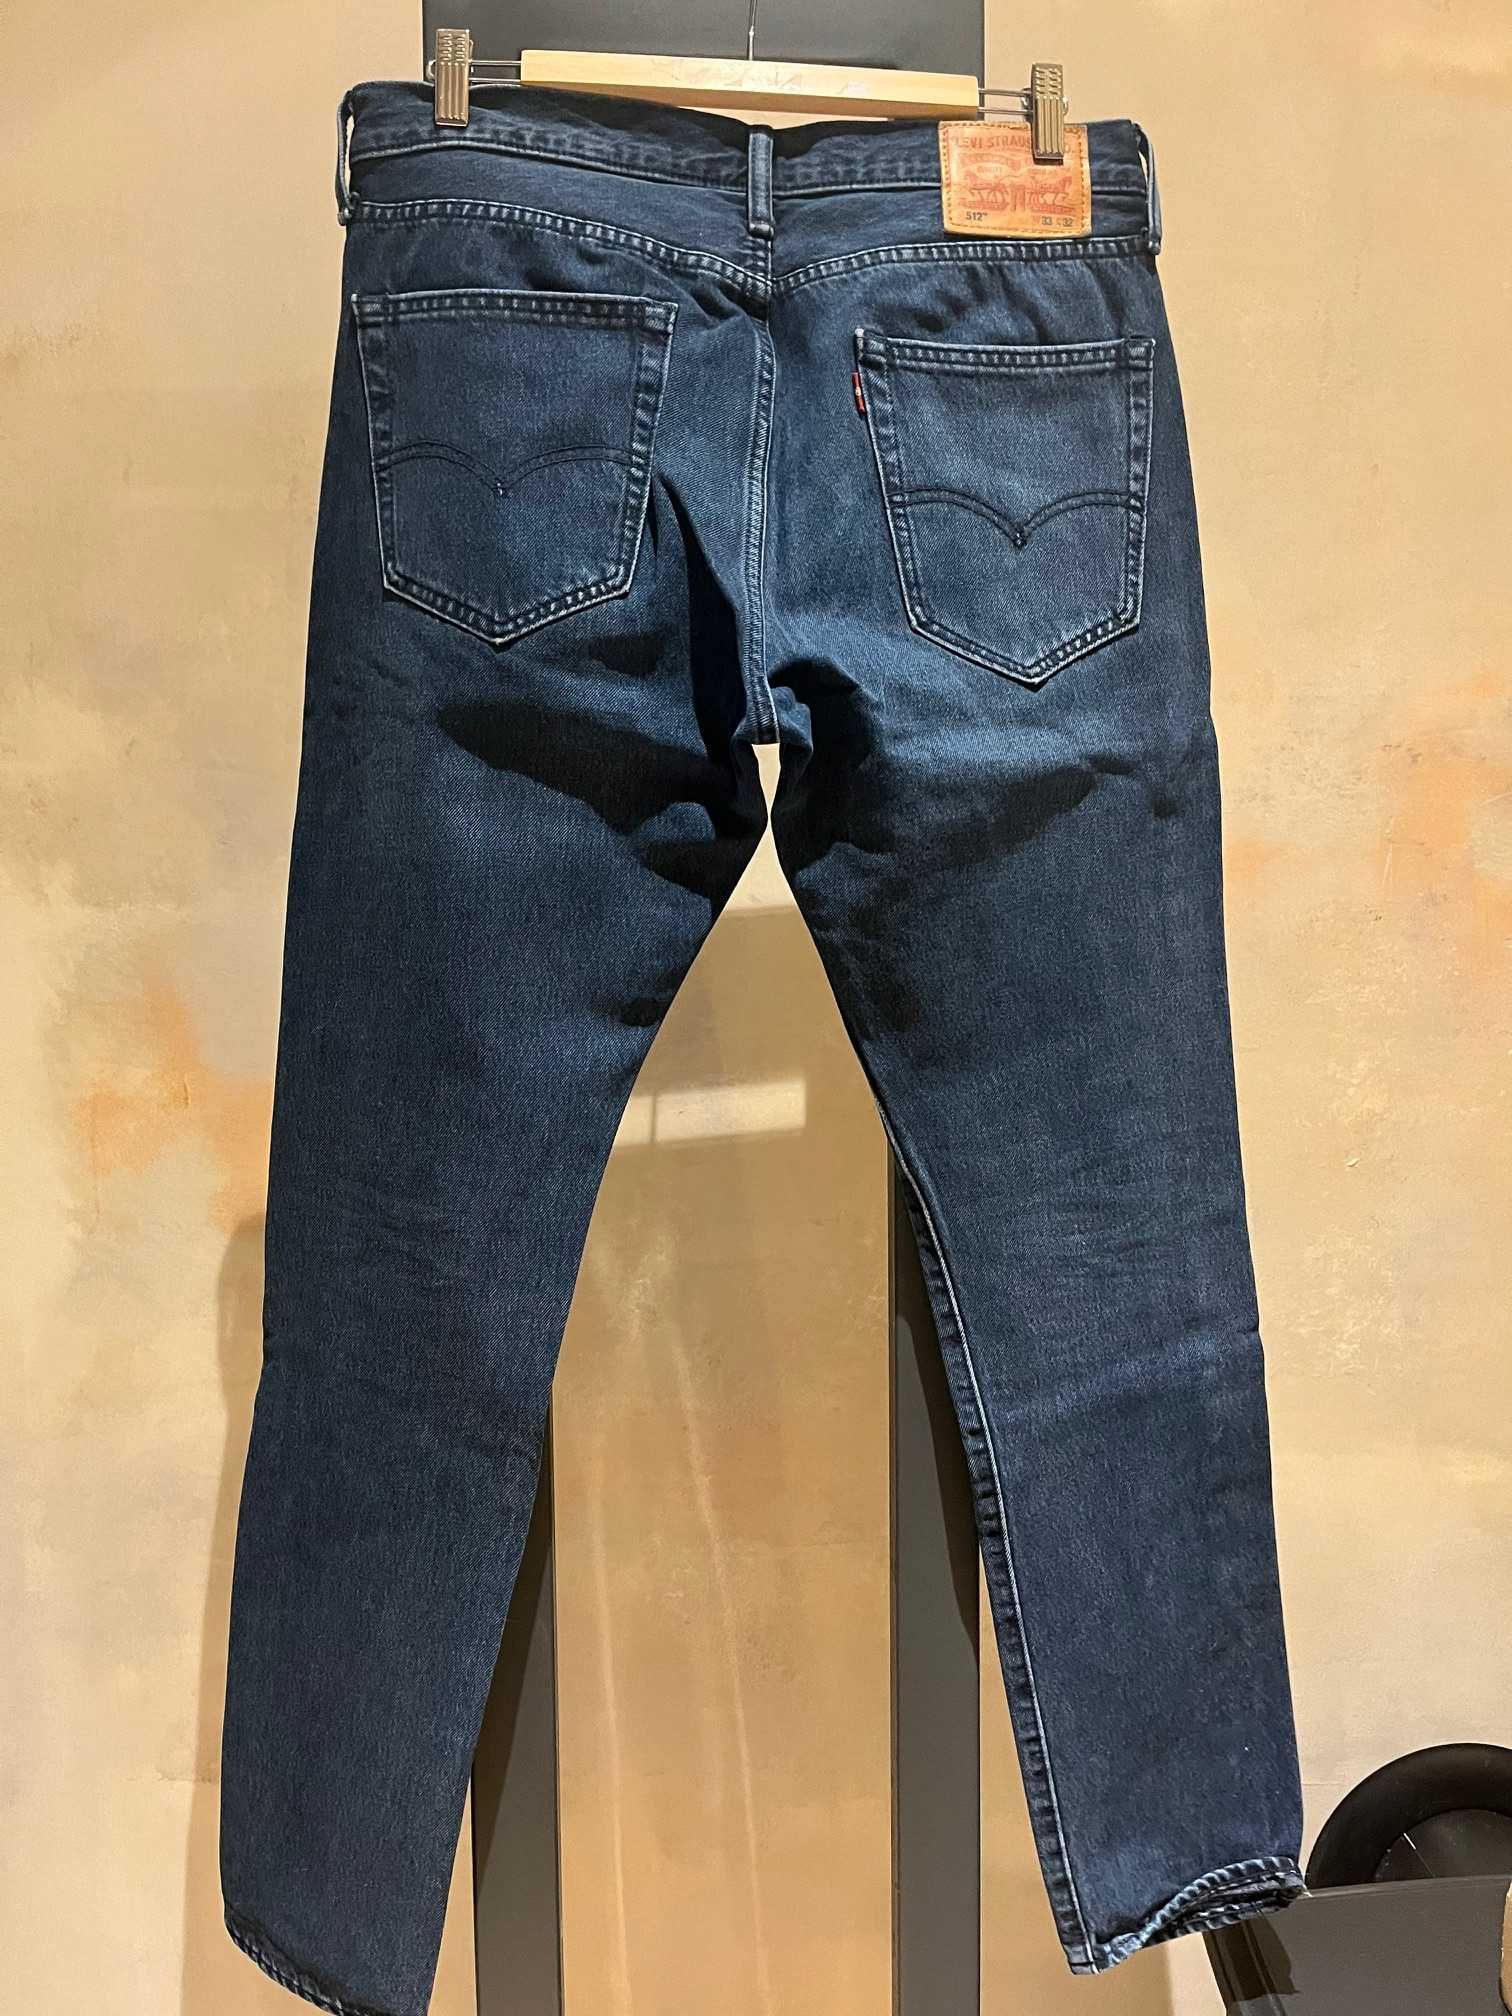 Oryginalne jeansy Levis męskie, model 512